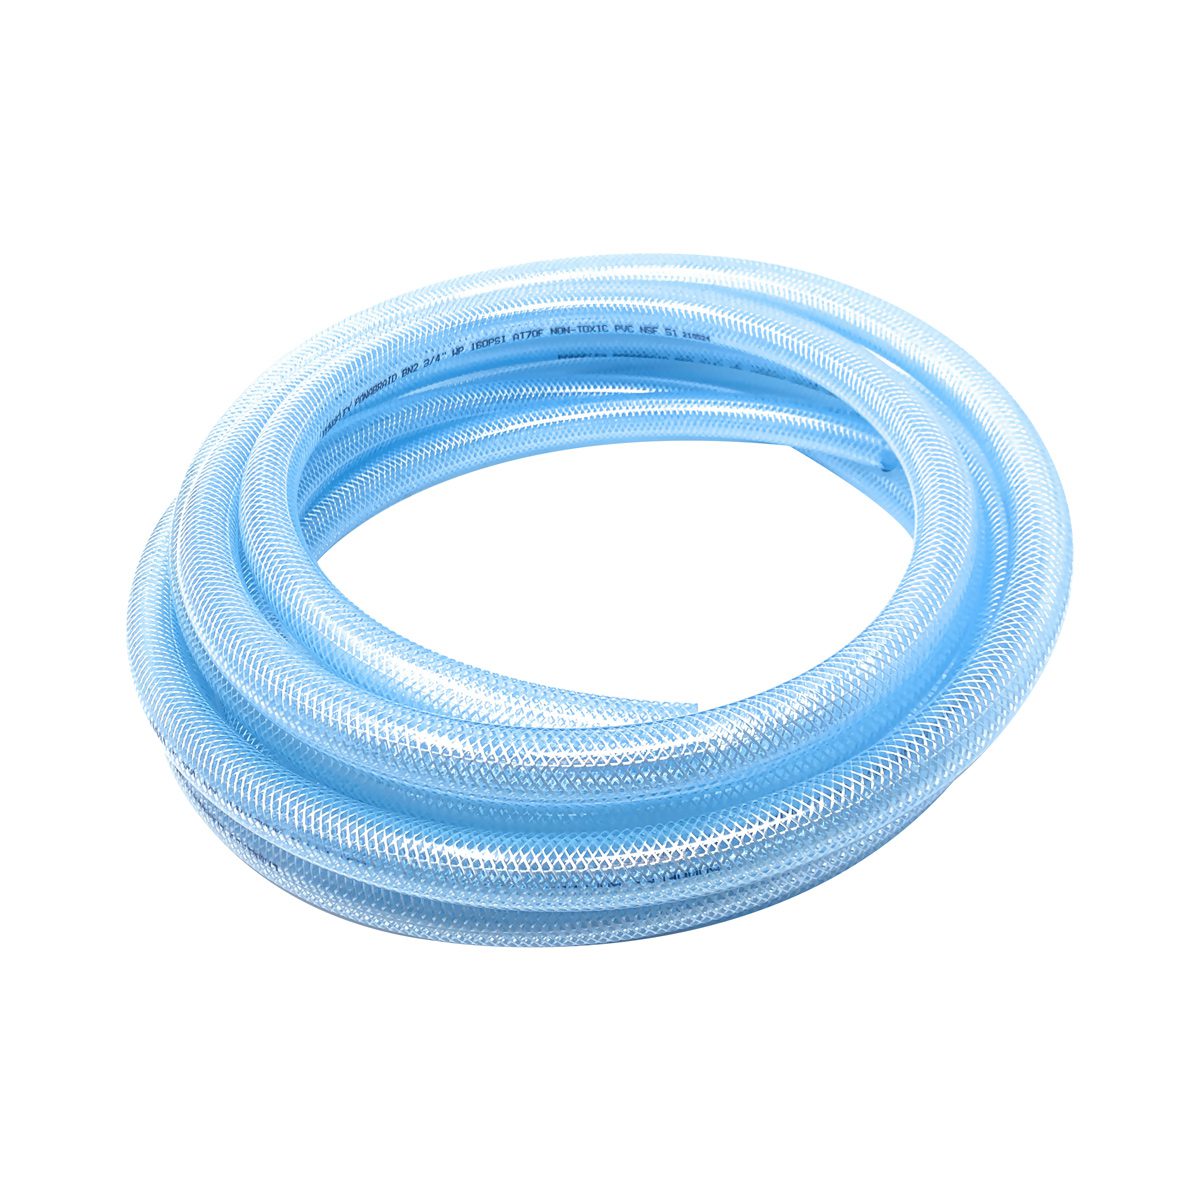 Gloxco Clear Braided PVC Tube, Food Grade Hose, 3/4 ID, 25 Ft Length